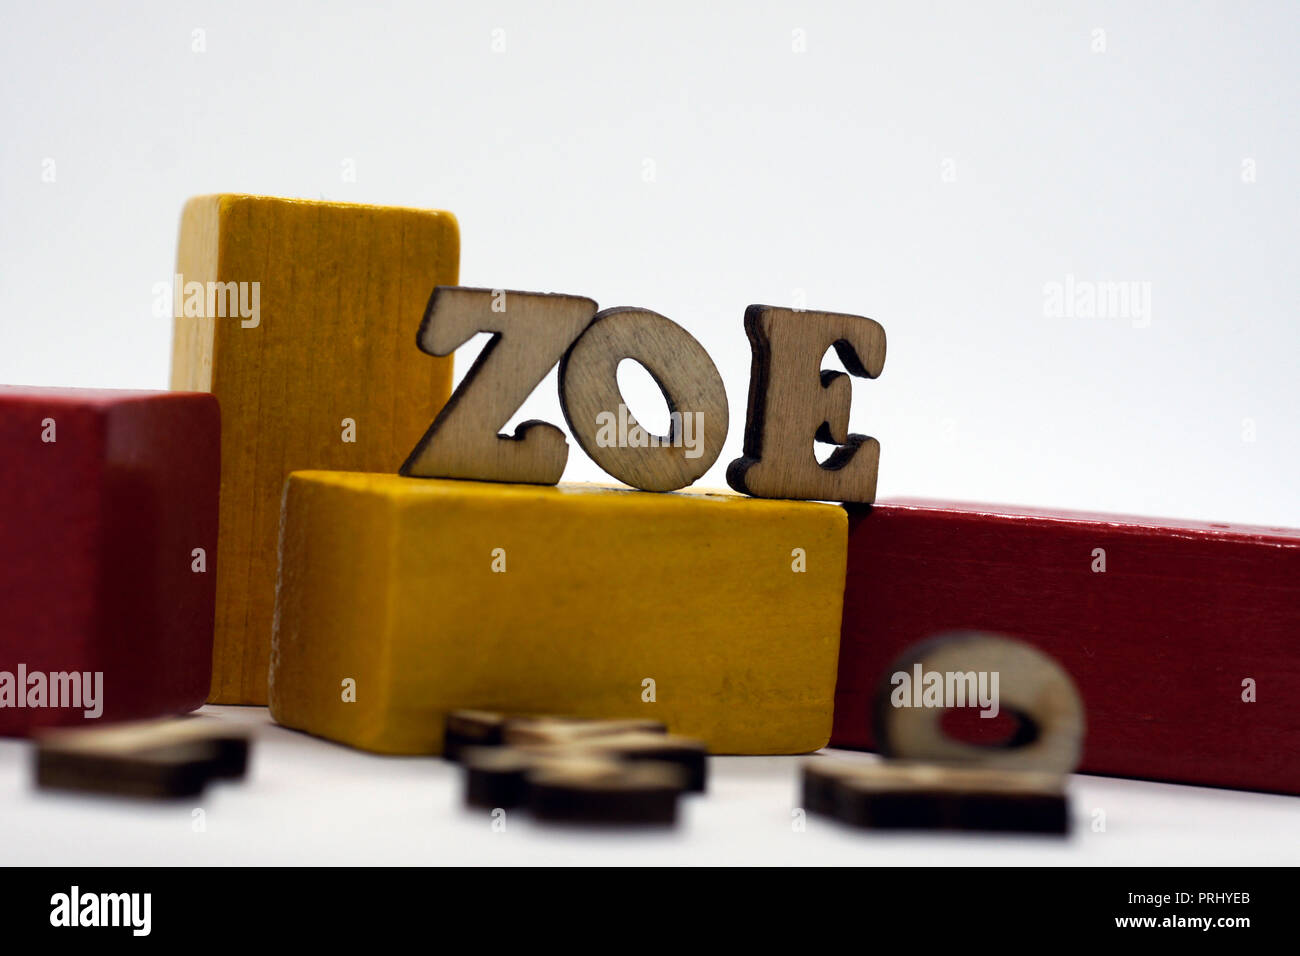 popular female first name zoe Stock Photo